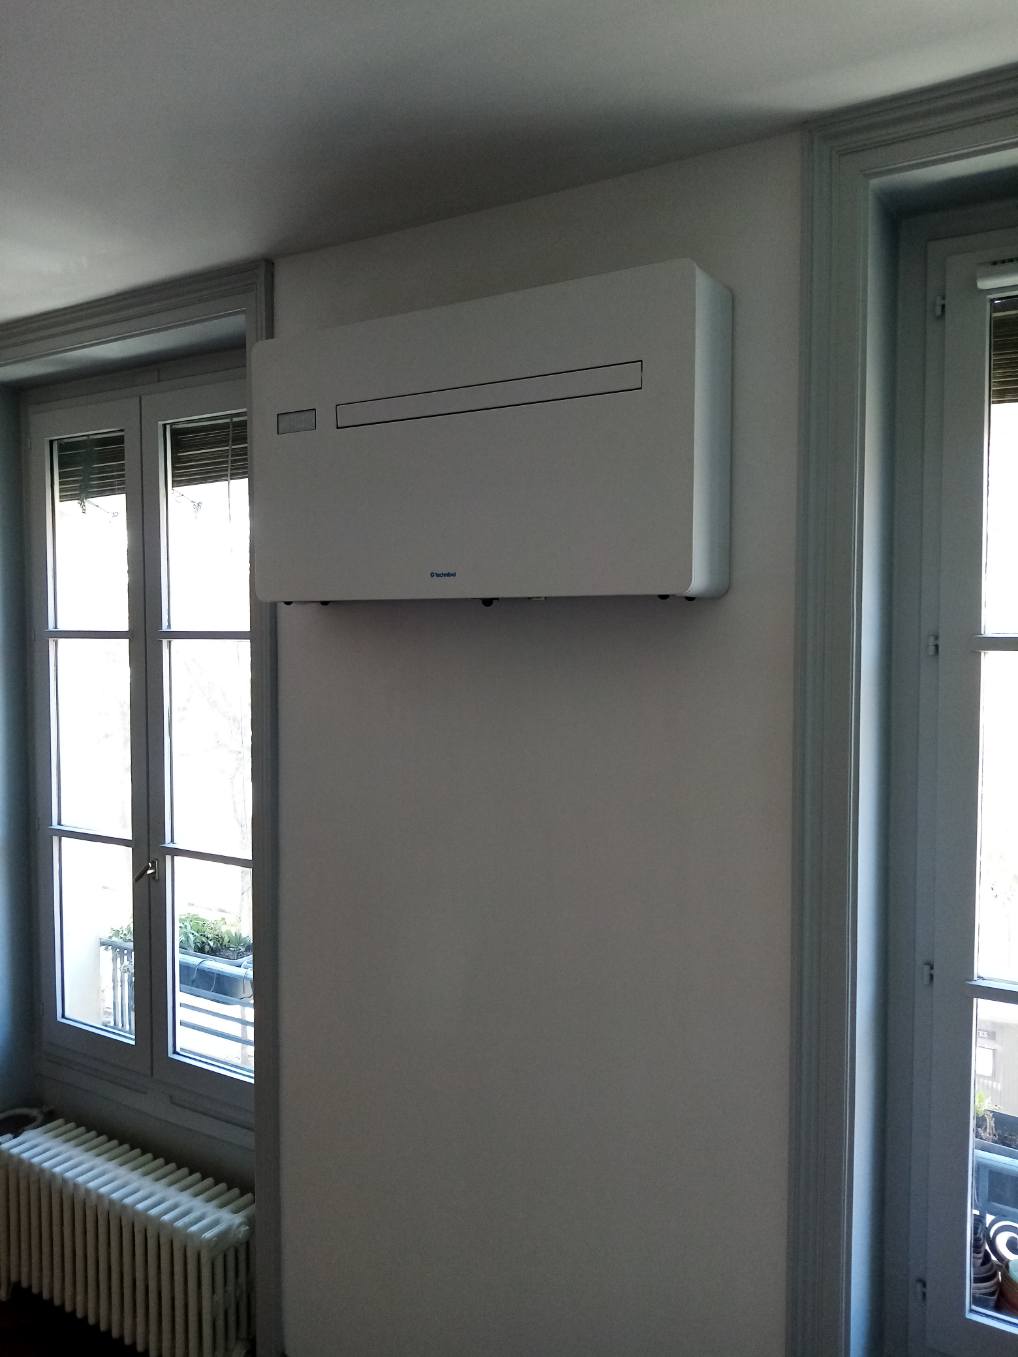 Installateur climatiseur monobloc Rhône